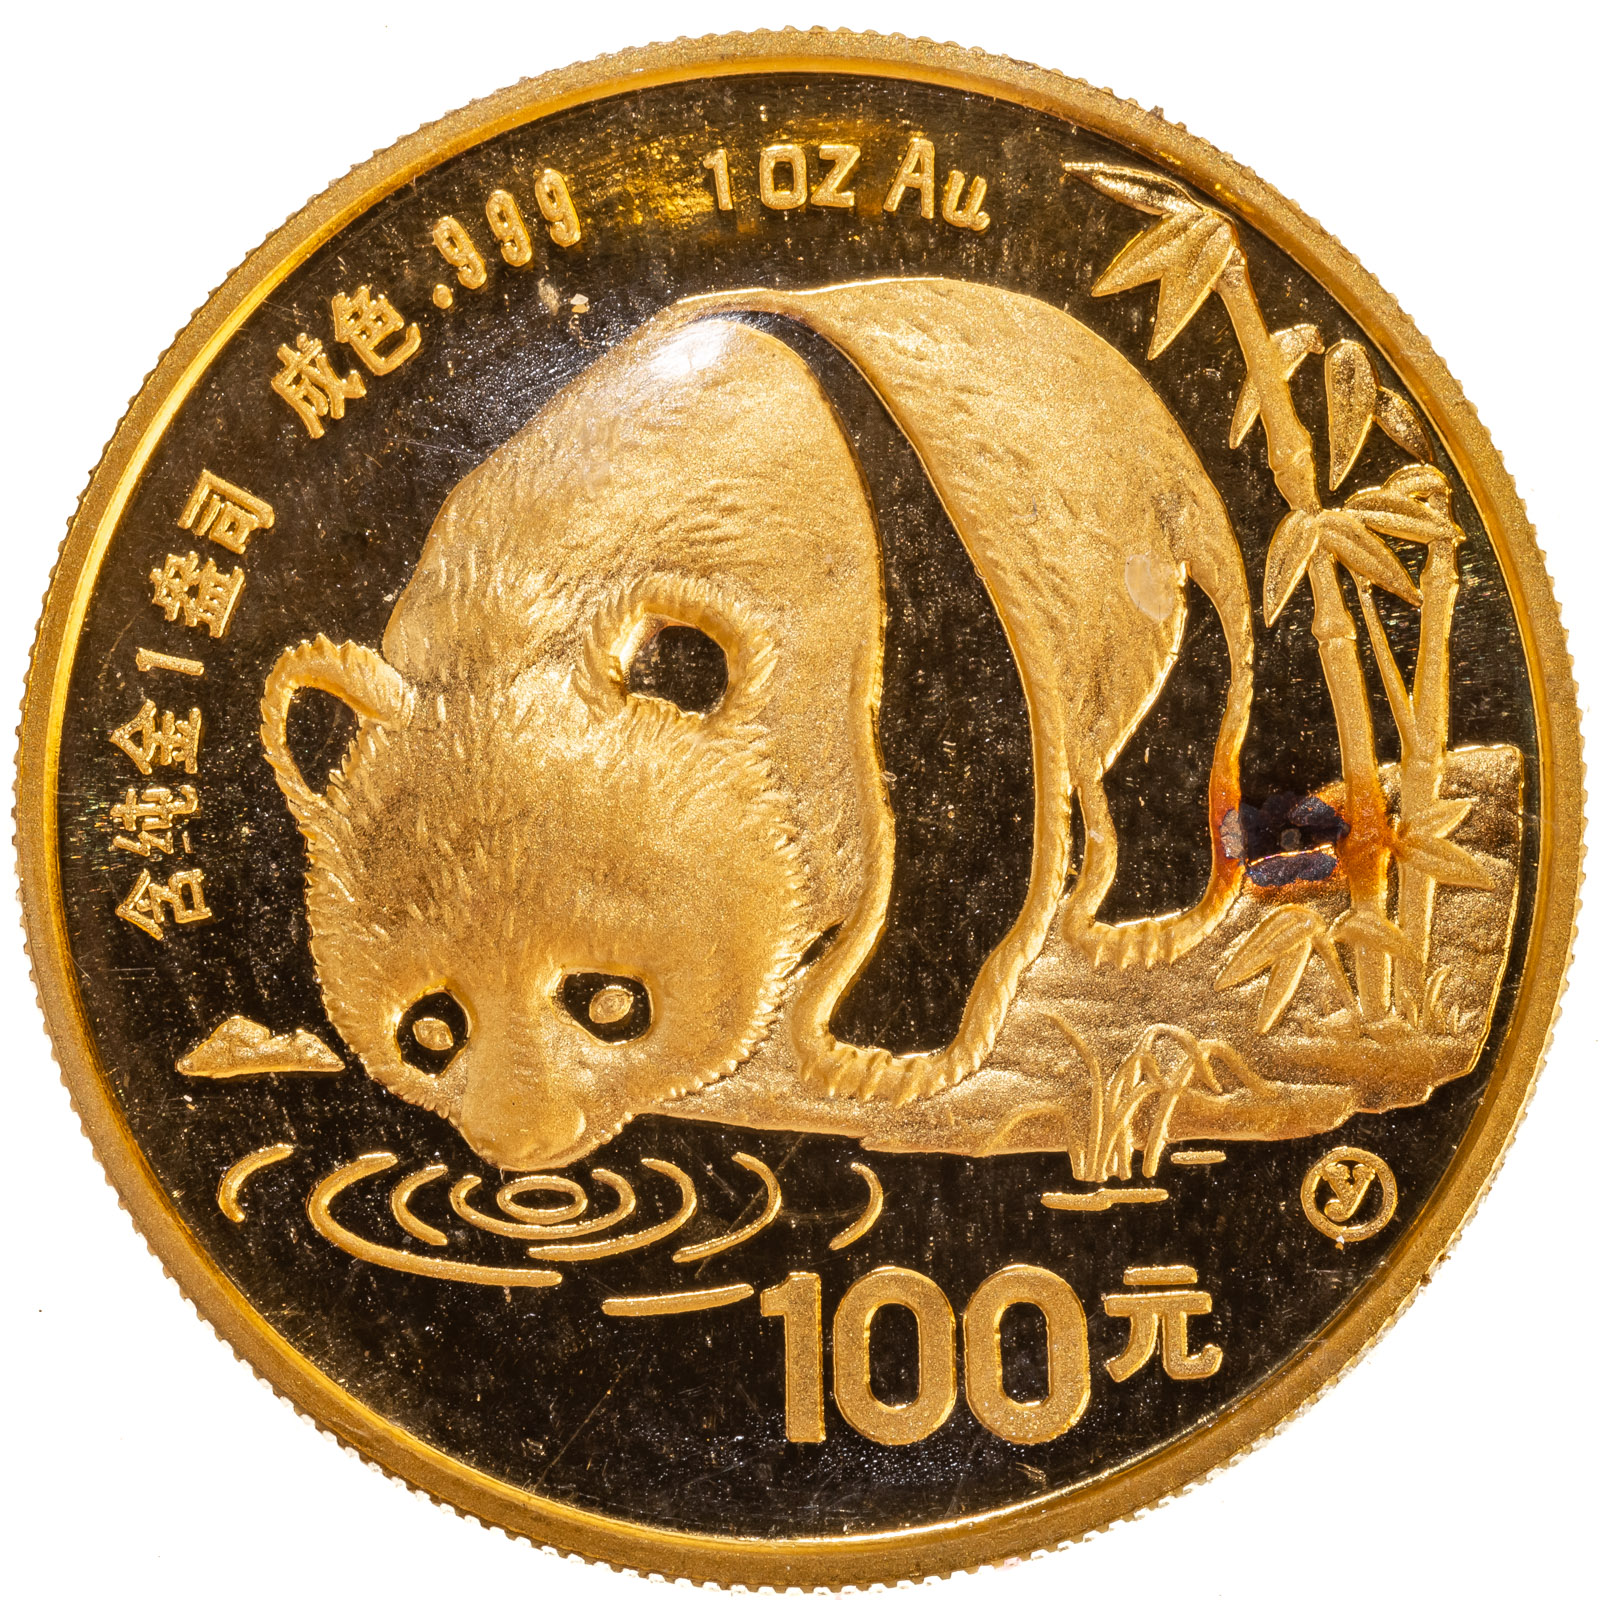 1987 100 YUAN GOLD 1 OZ PANDA UNC/PROOF